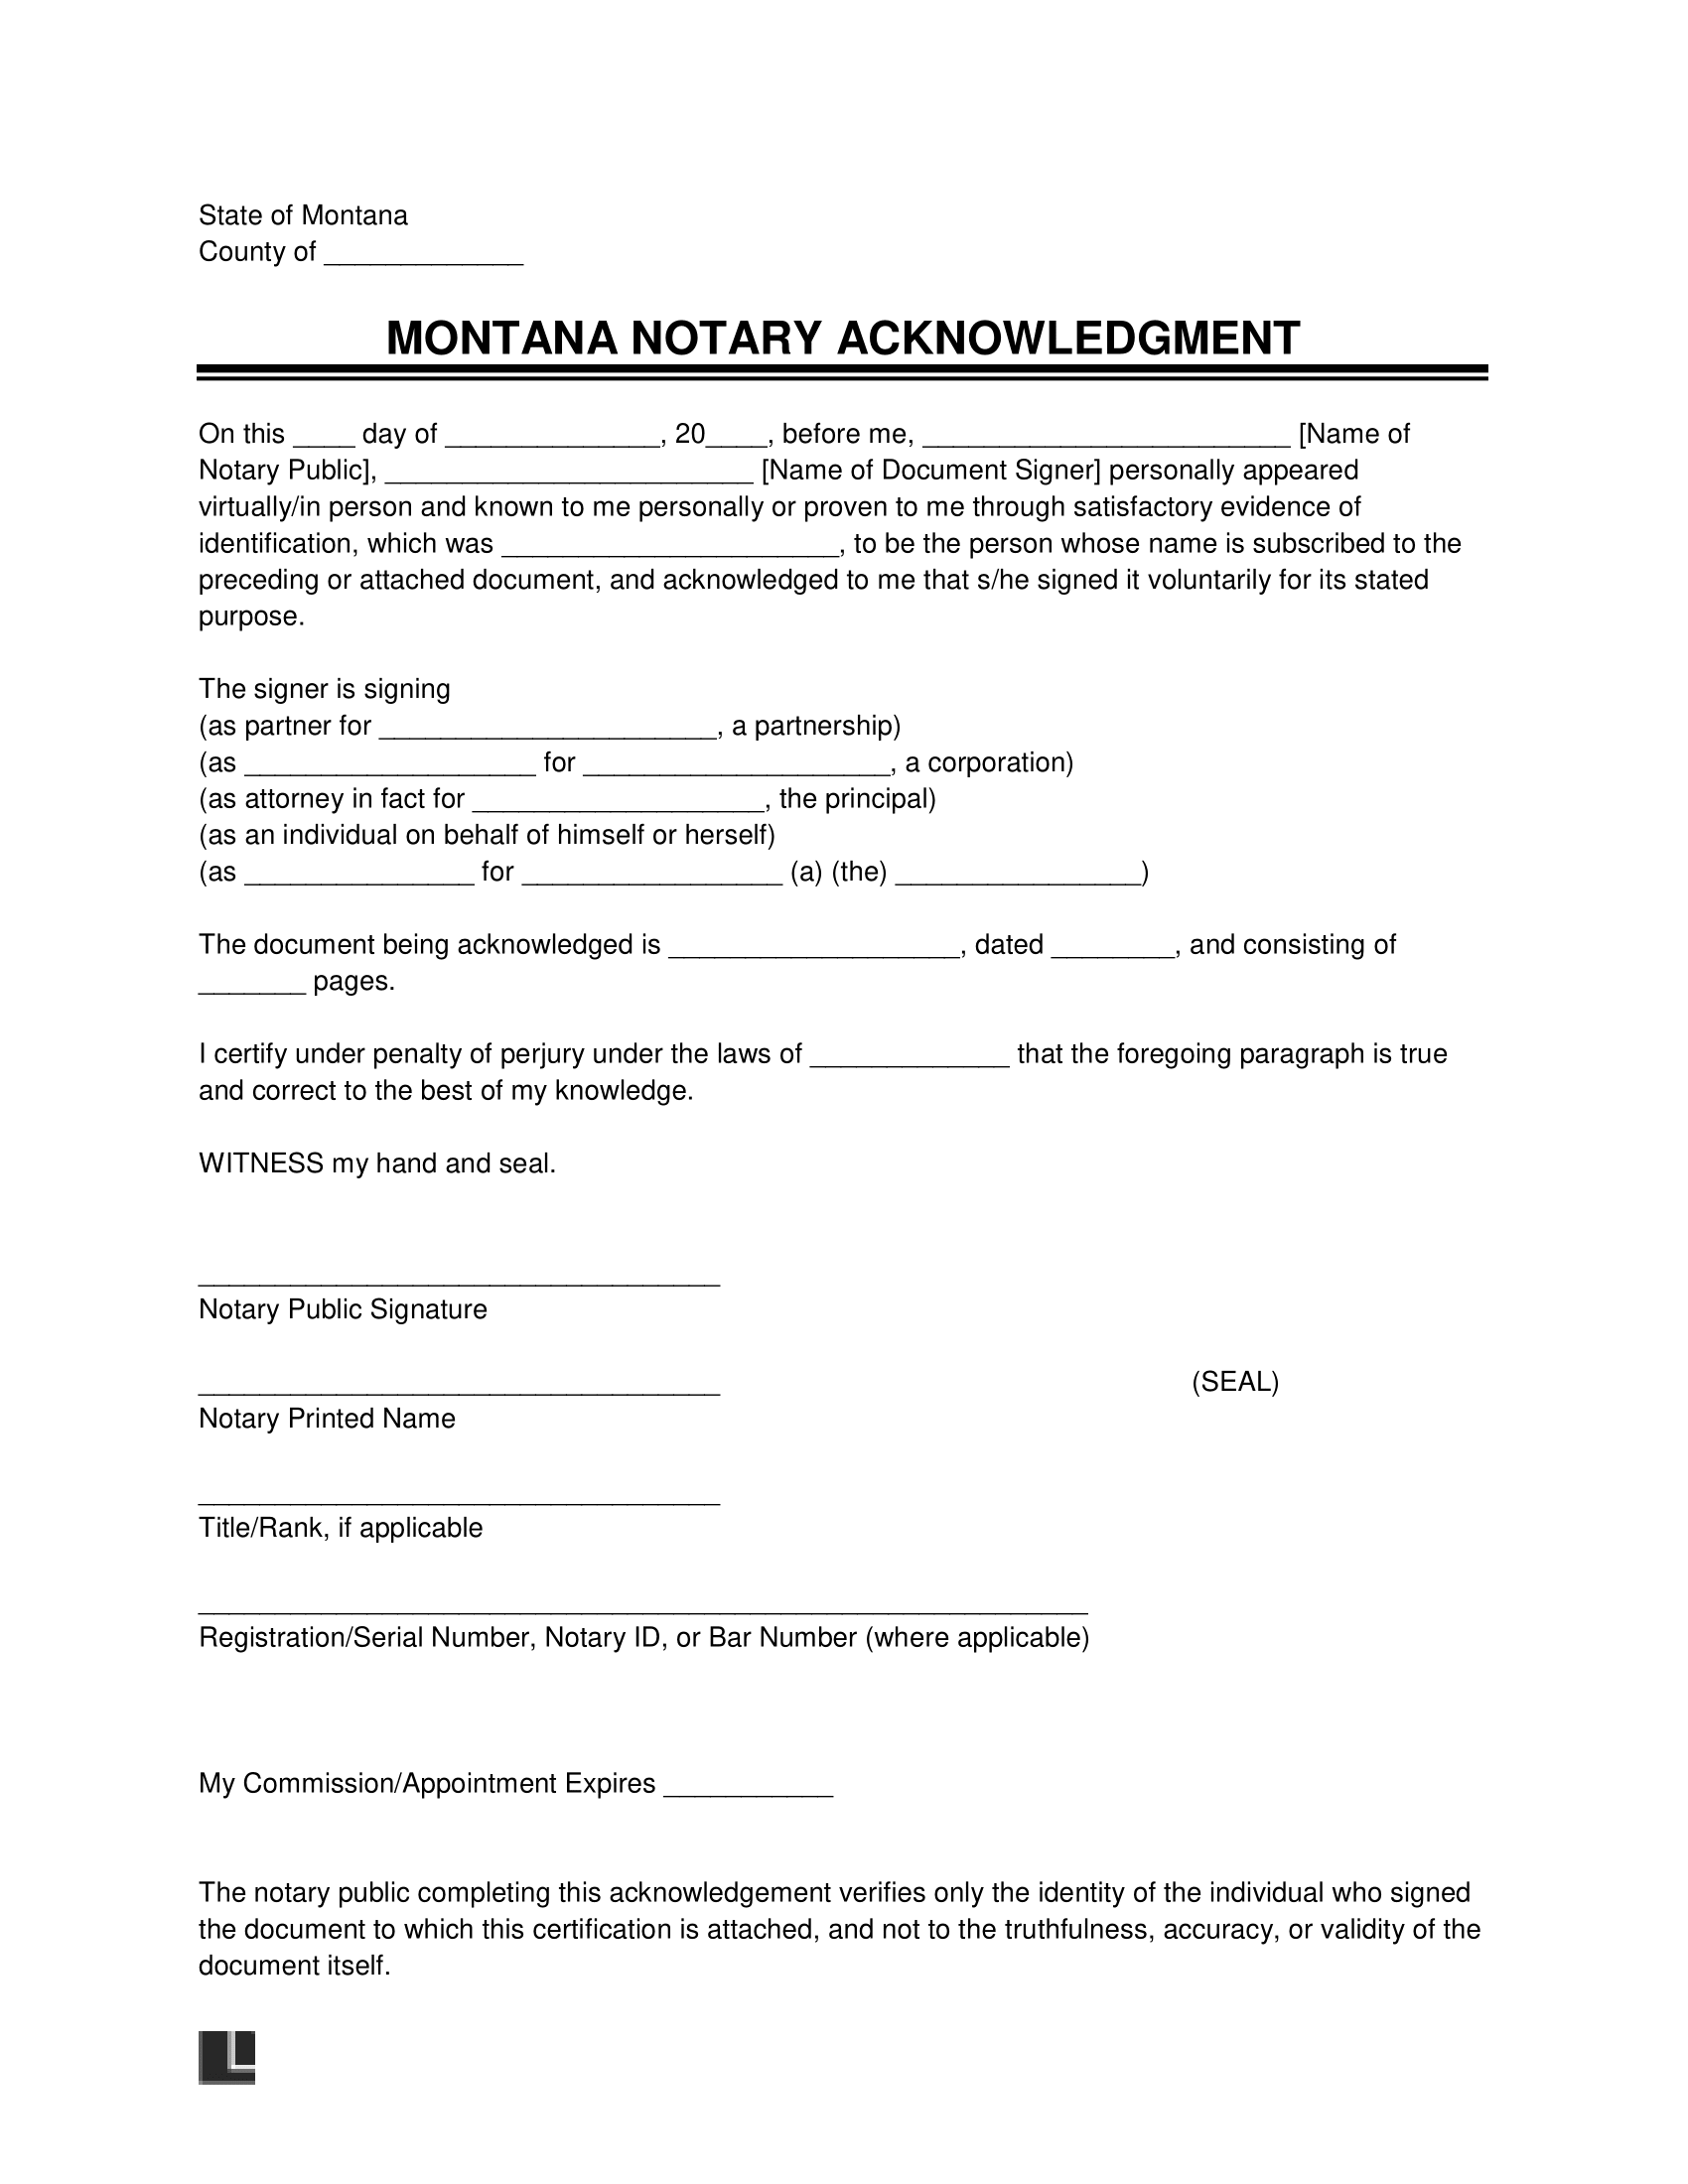 Montana Notary Acknowledgement